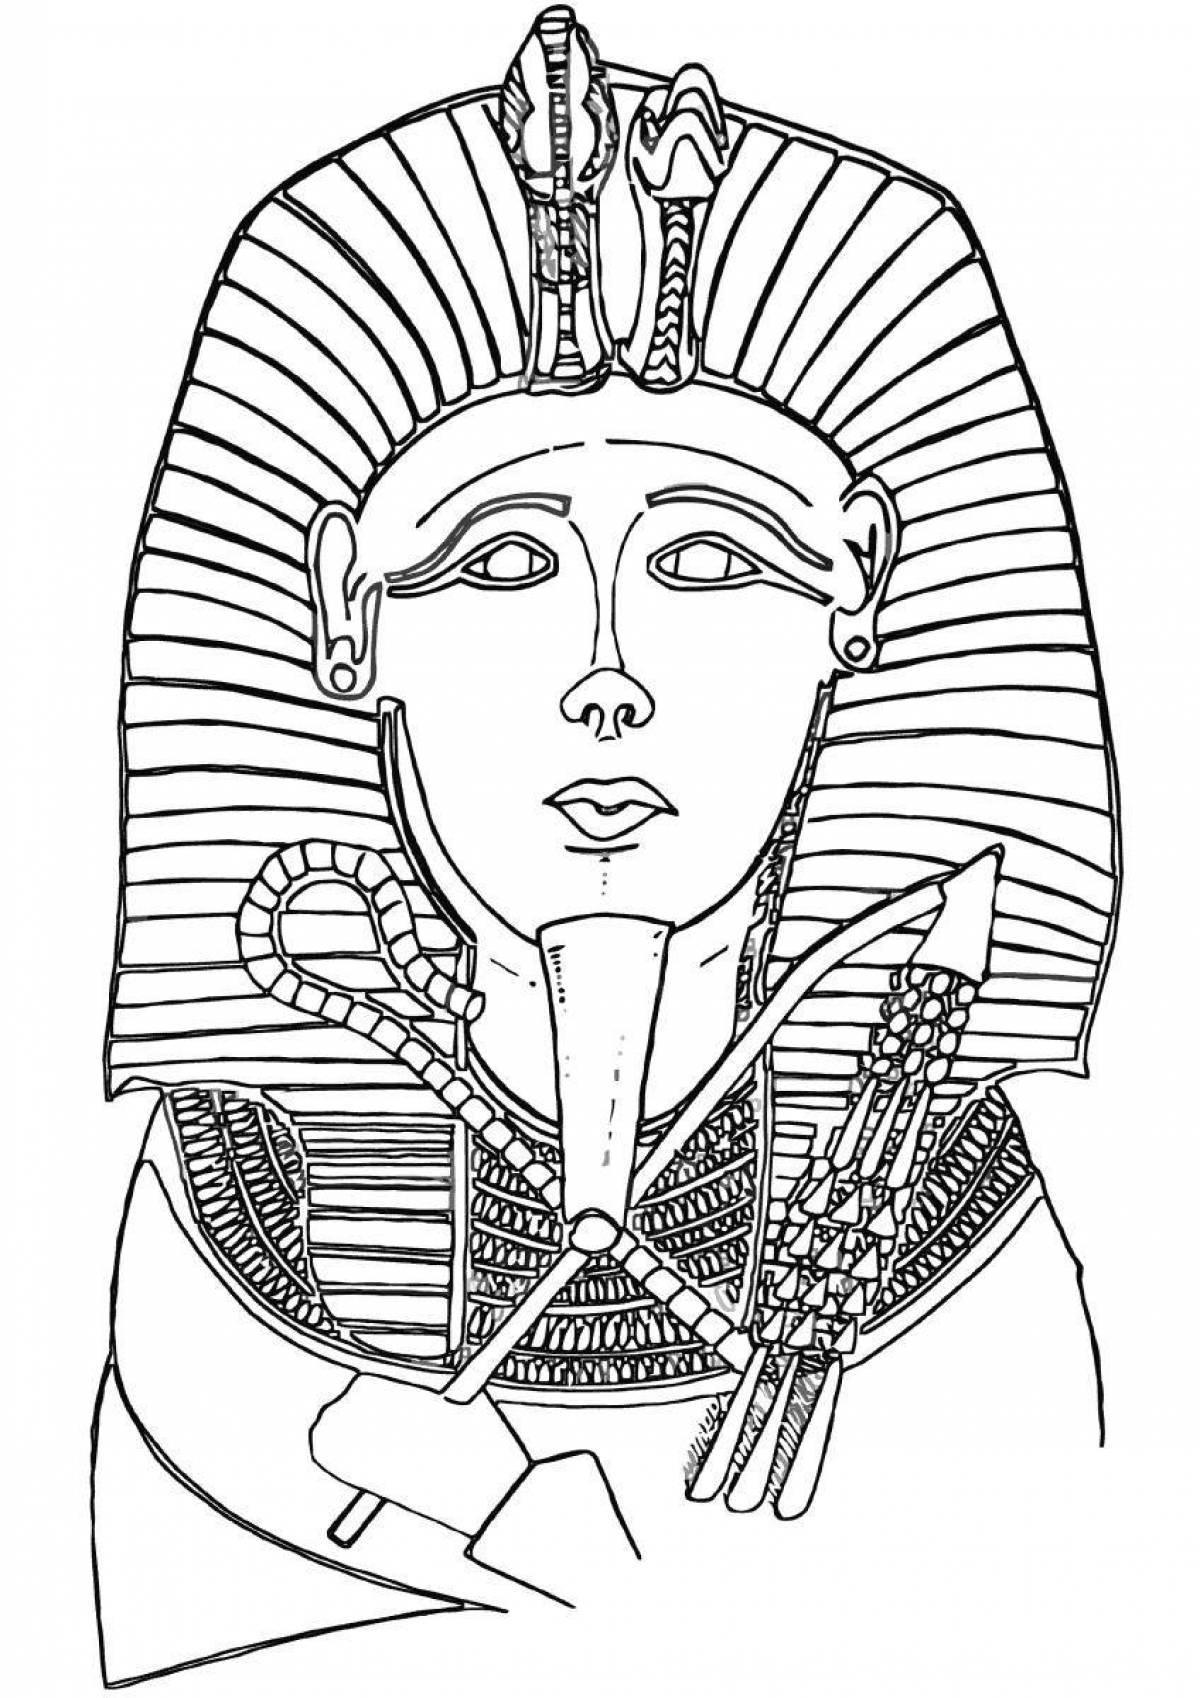 Rich pharaoh coloring page